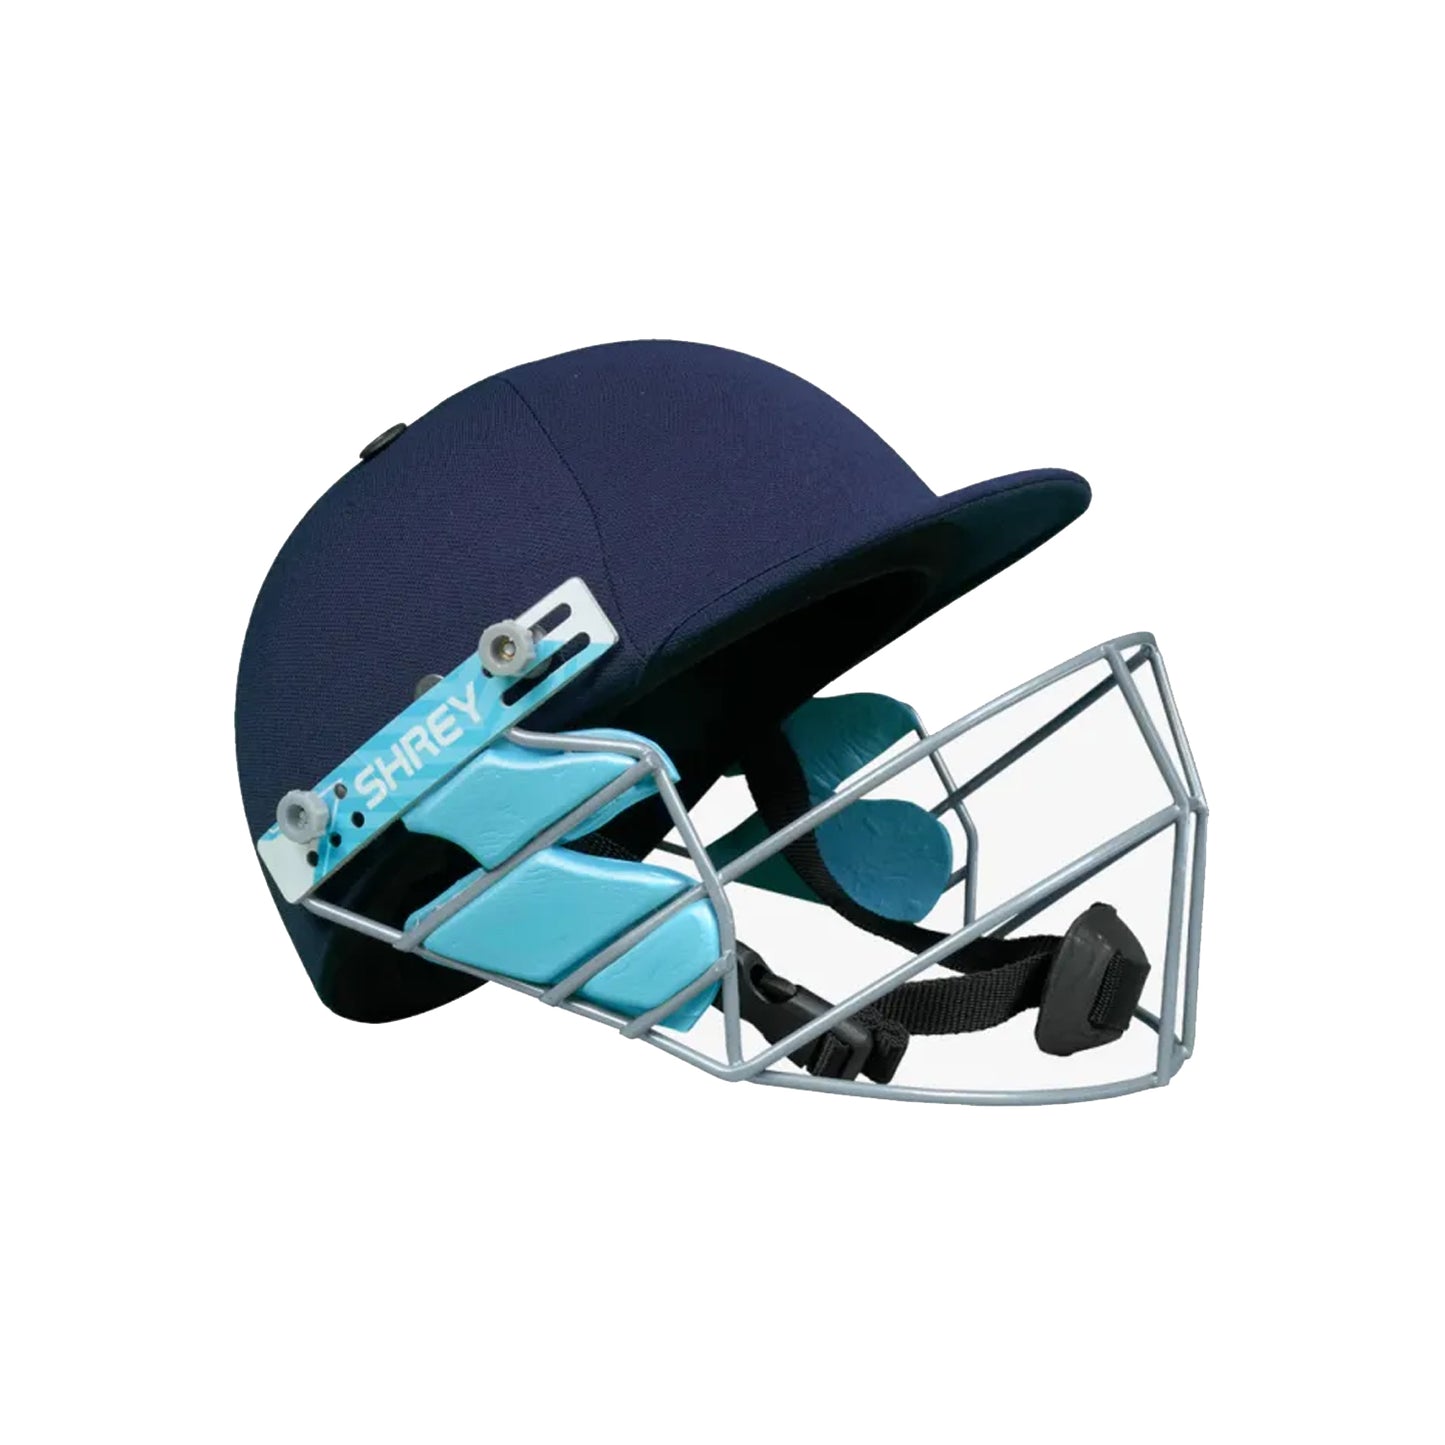 Shrey Star 2.0 Steel Cricket Helmet, Navy - Best Price online Prokicksports.com